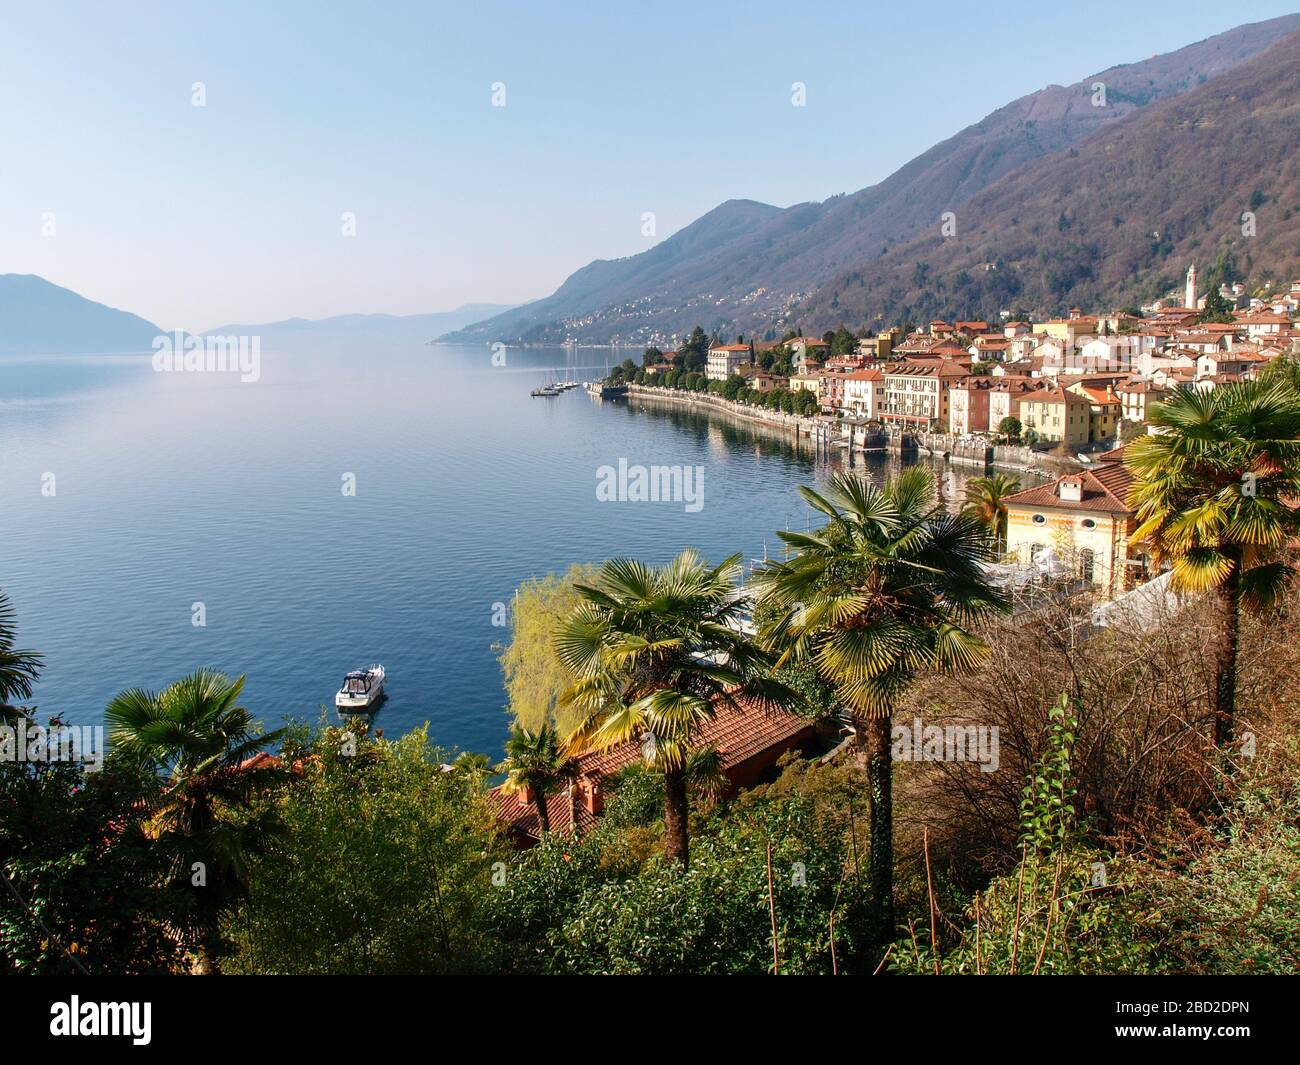 Cannero, Italy: village on the edge of Lake Maggiore. Stock Photo